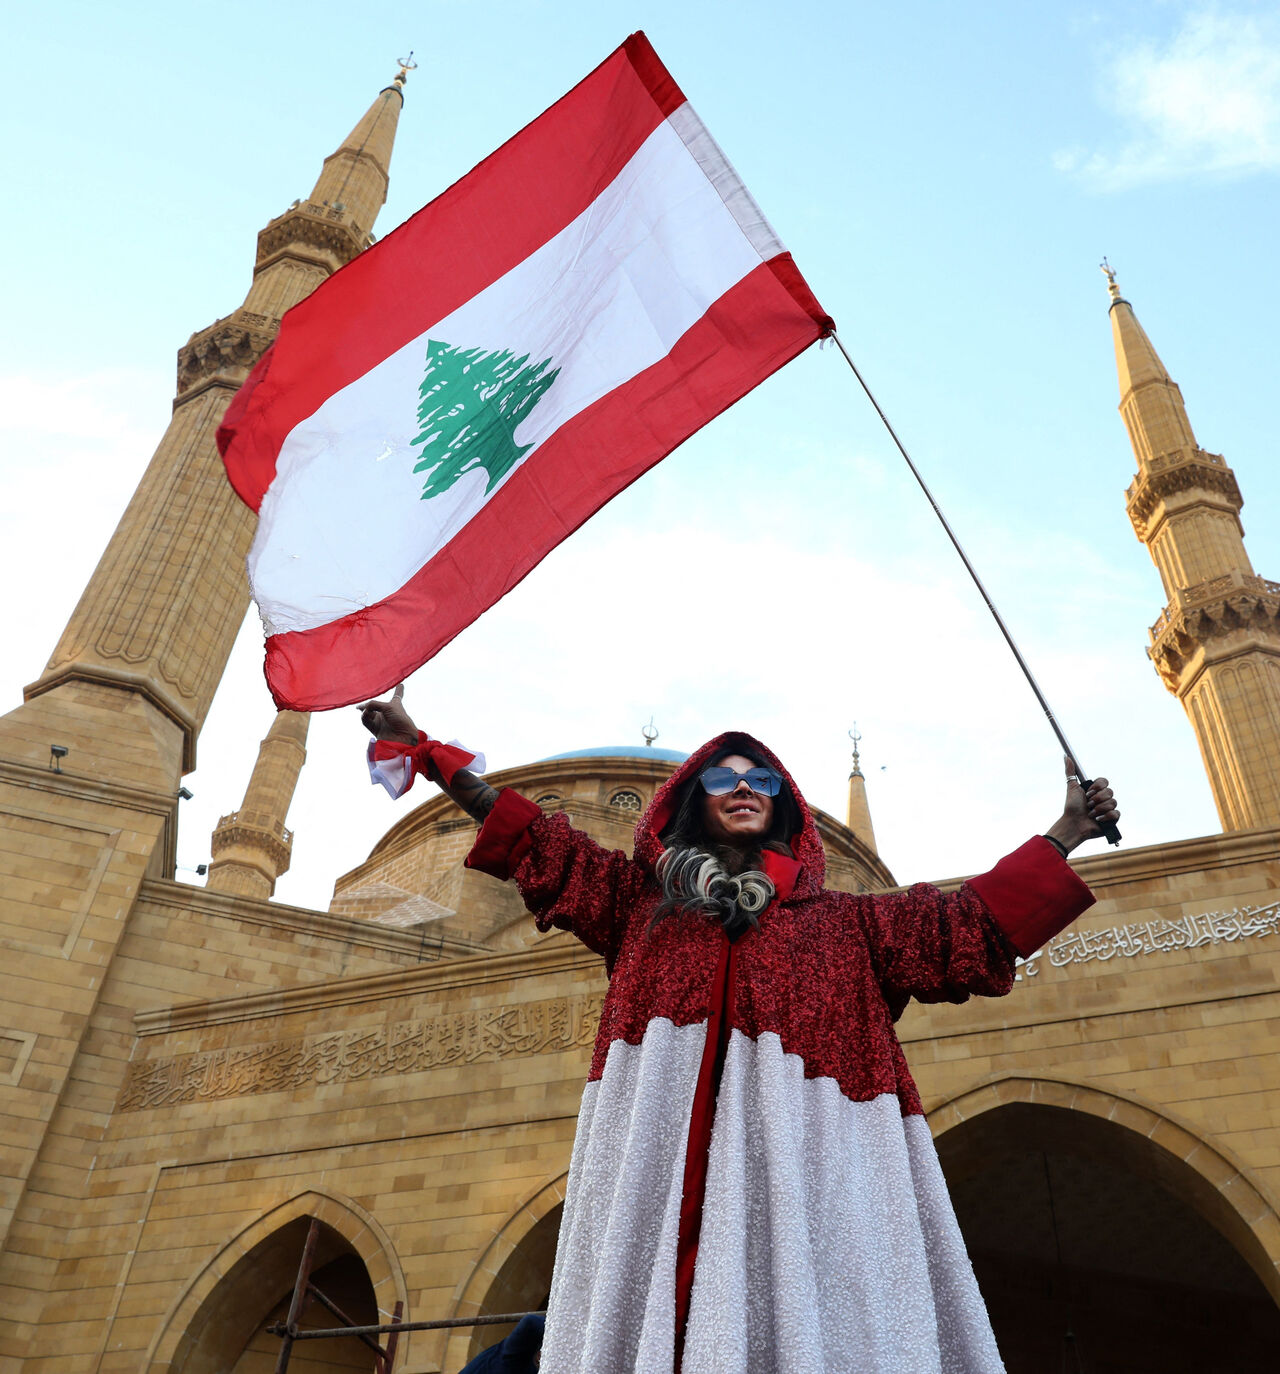 Lebanon cover image